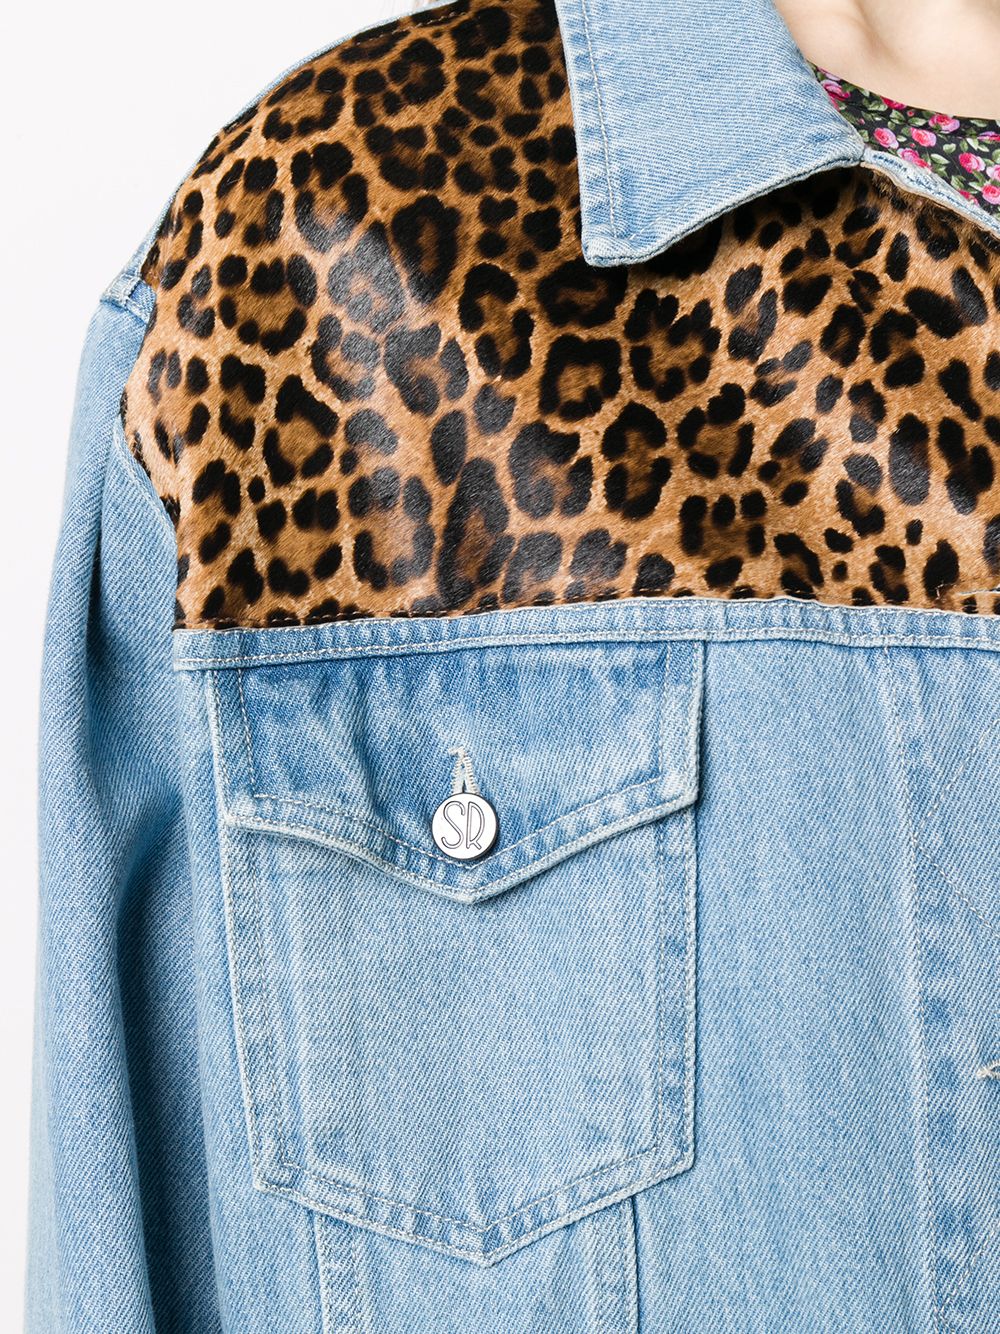 фото Simonetta ravizza джинсовая куртка с леопардовым принтом